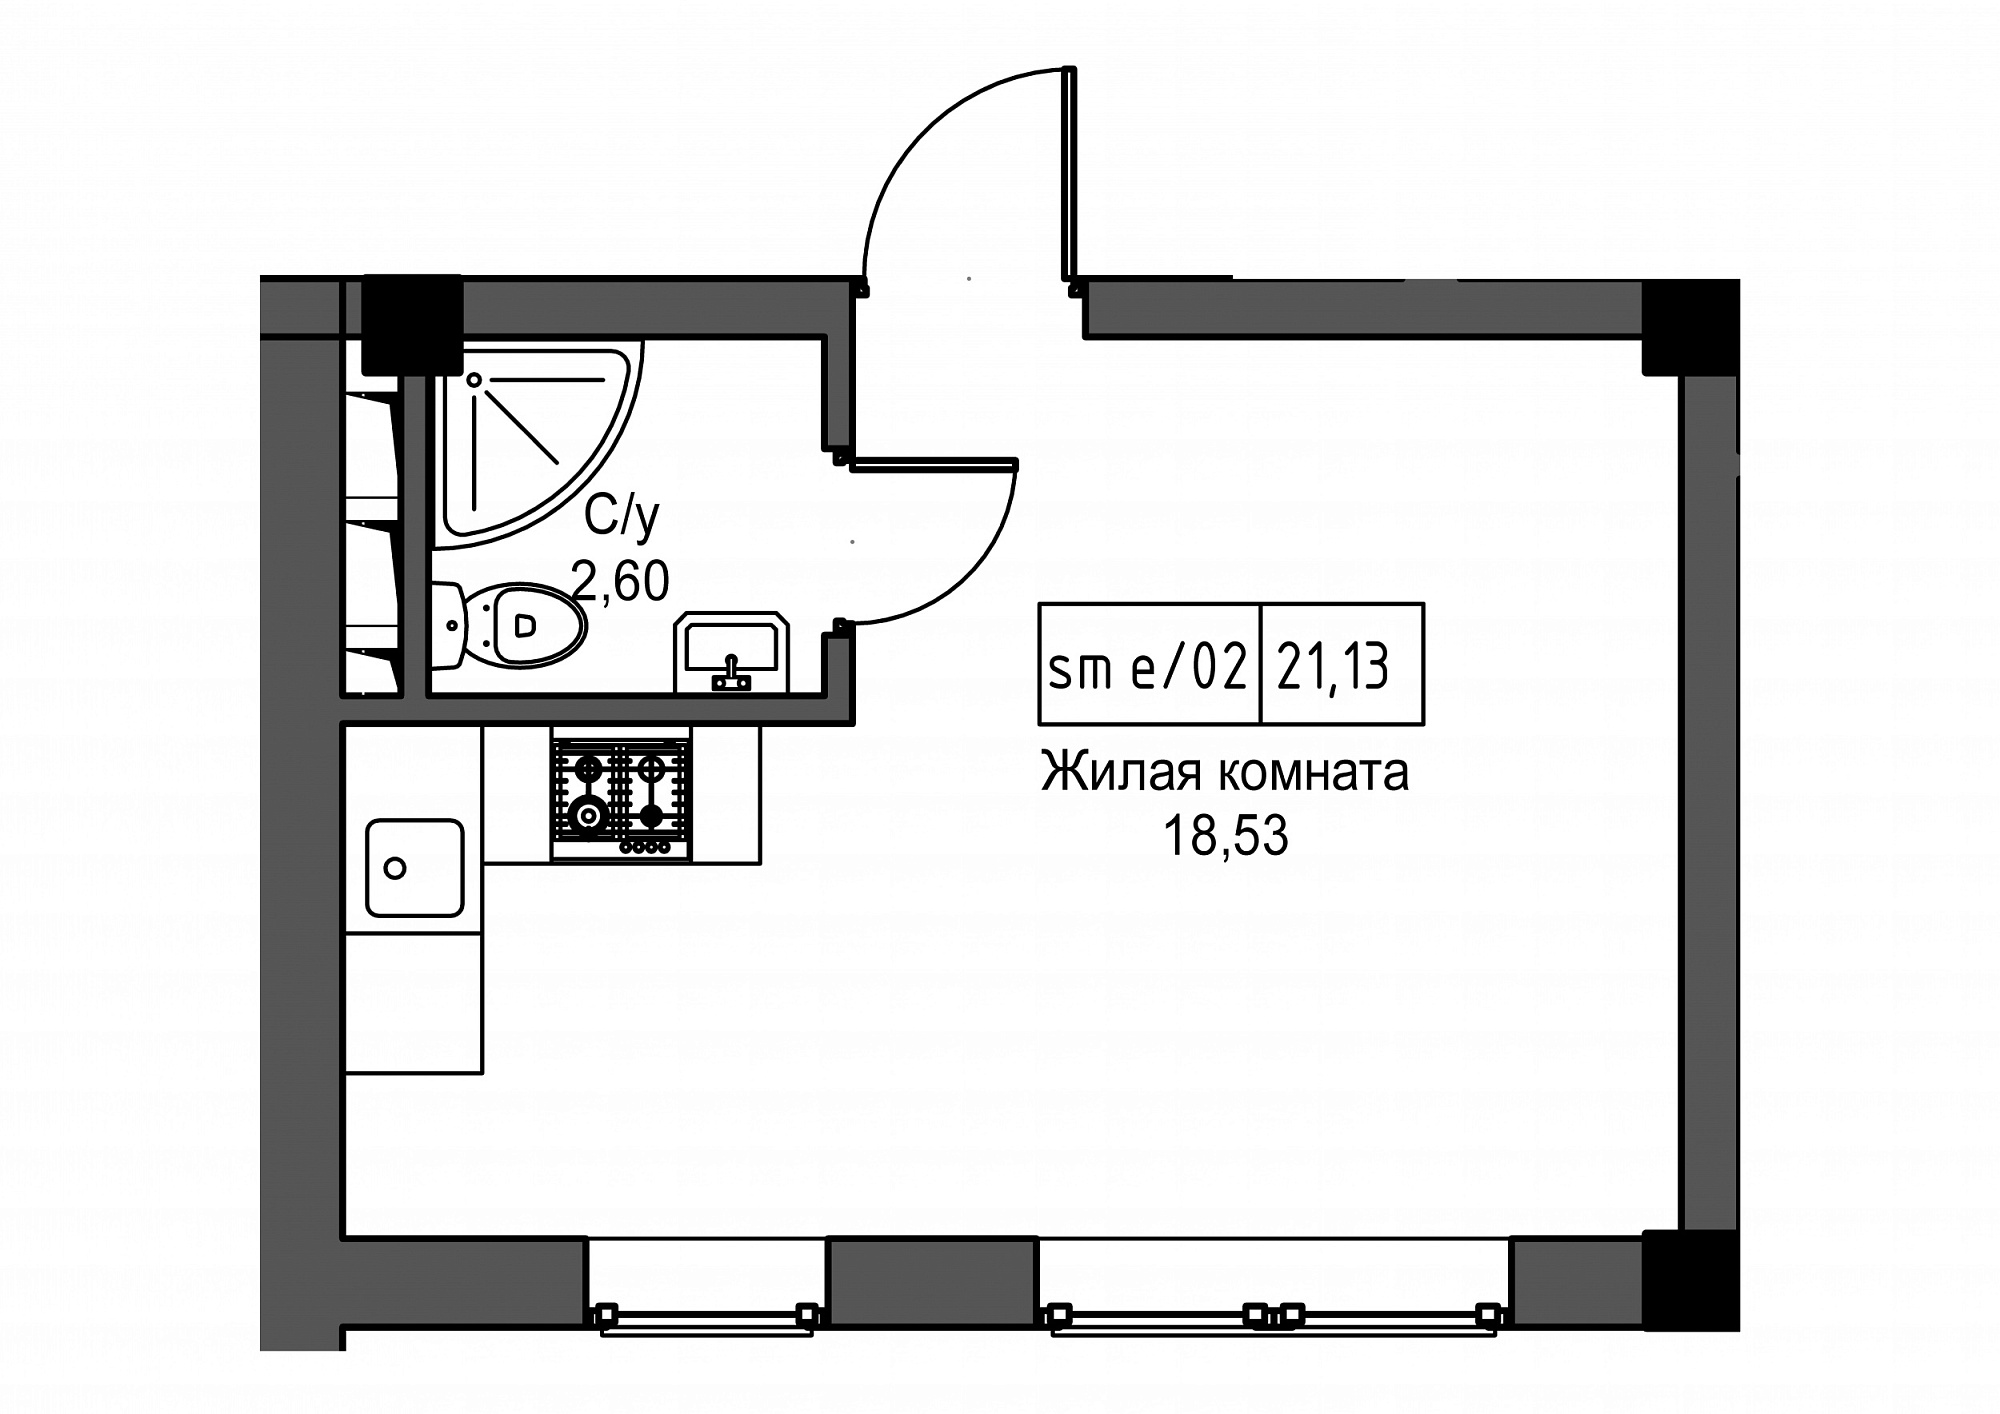 Planning Smart flats area 21.13m2, UM-002-02/0104.